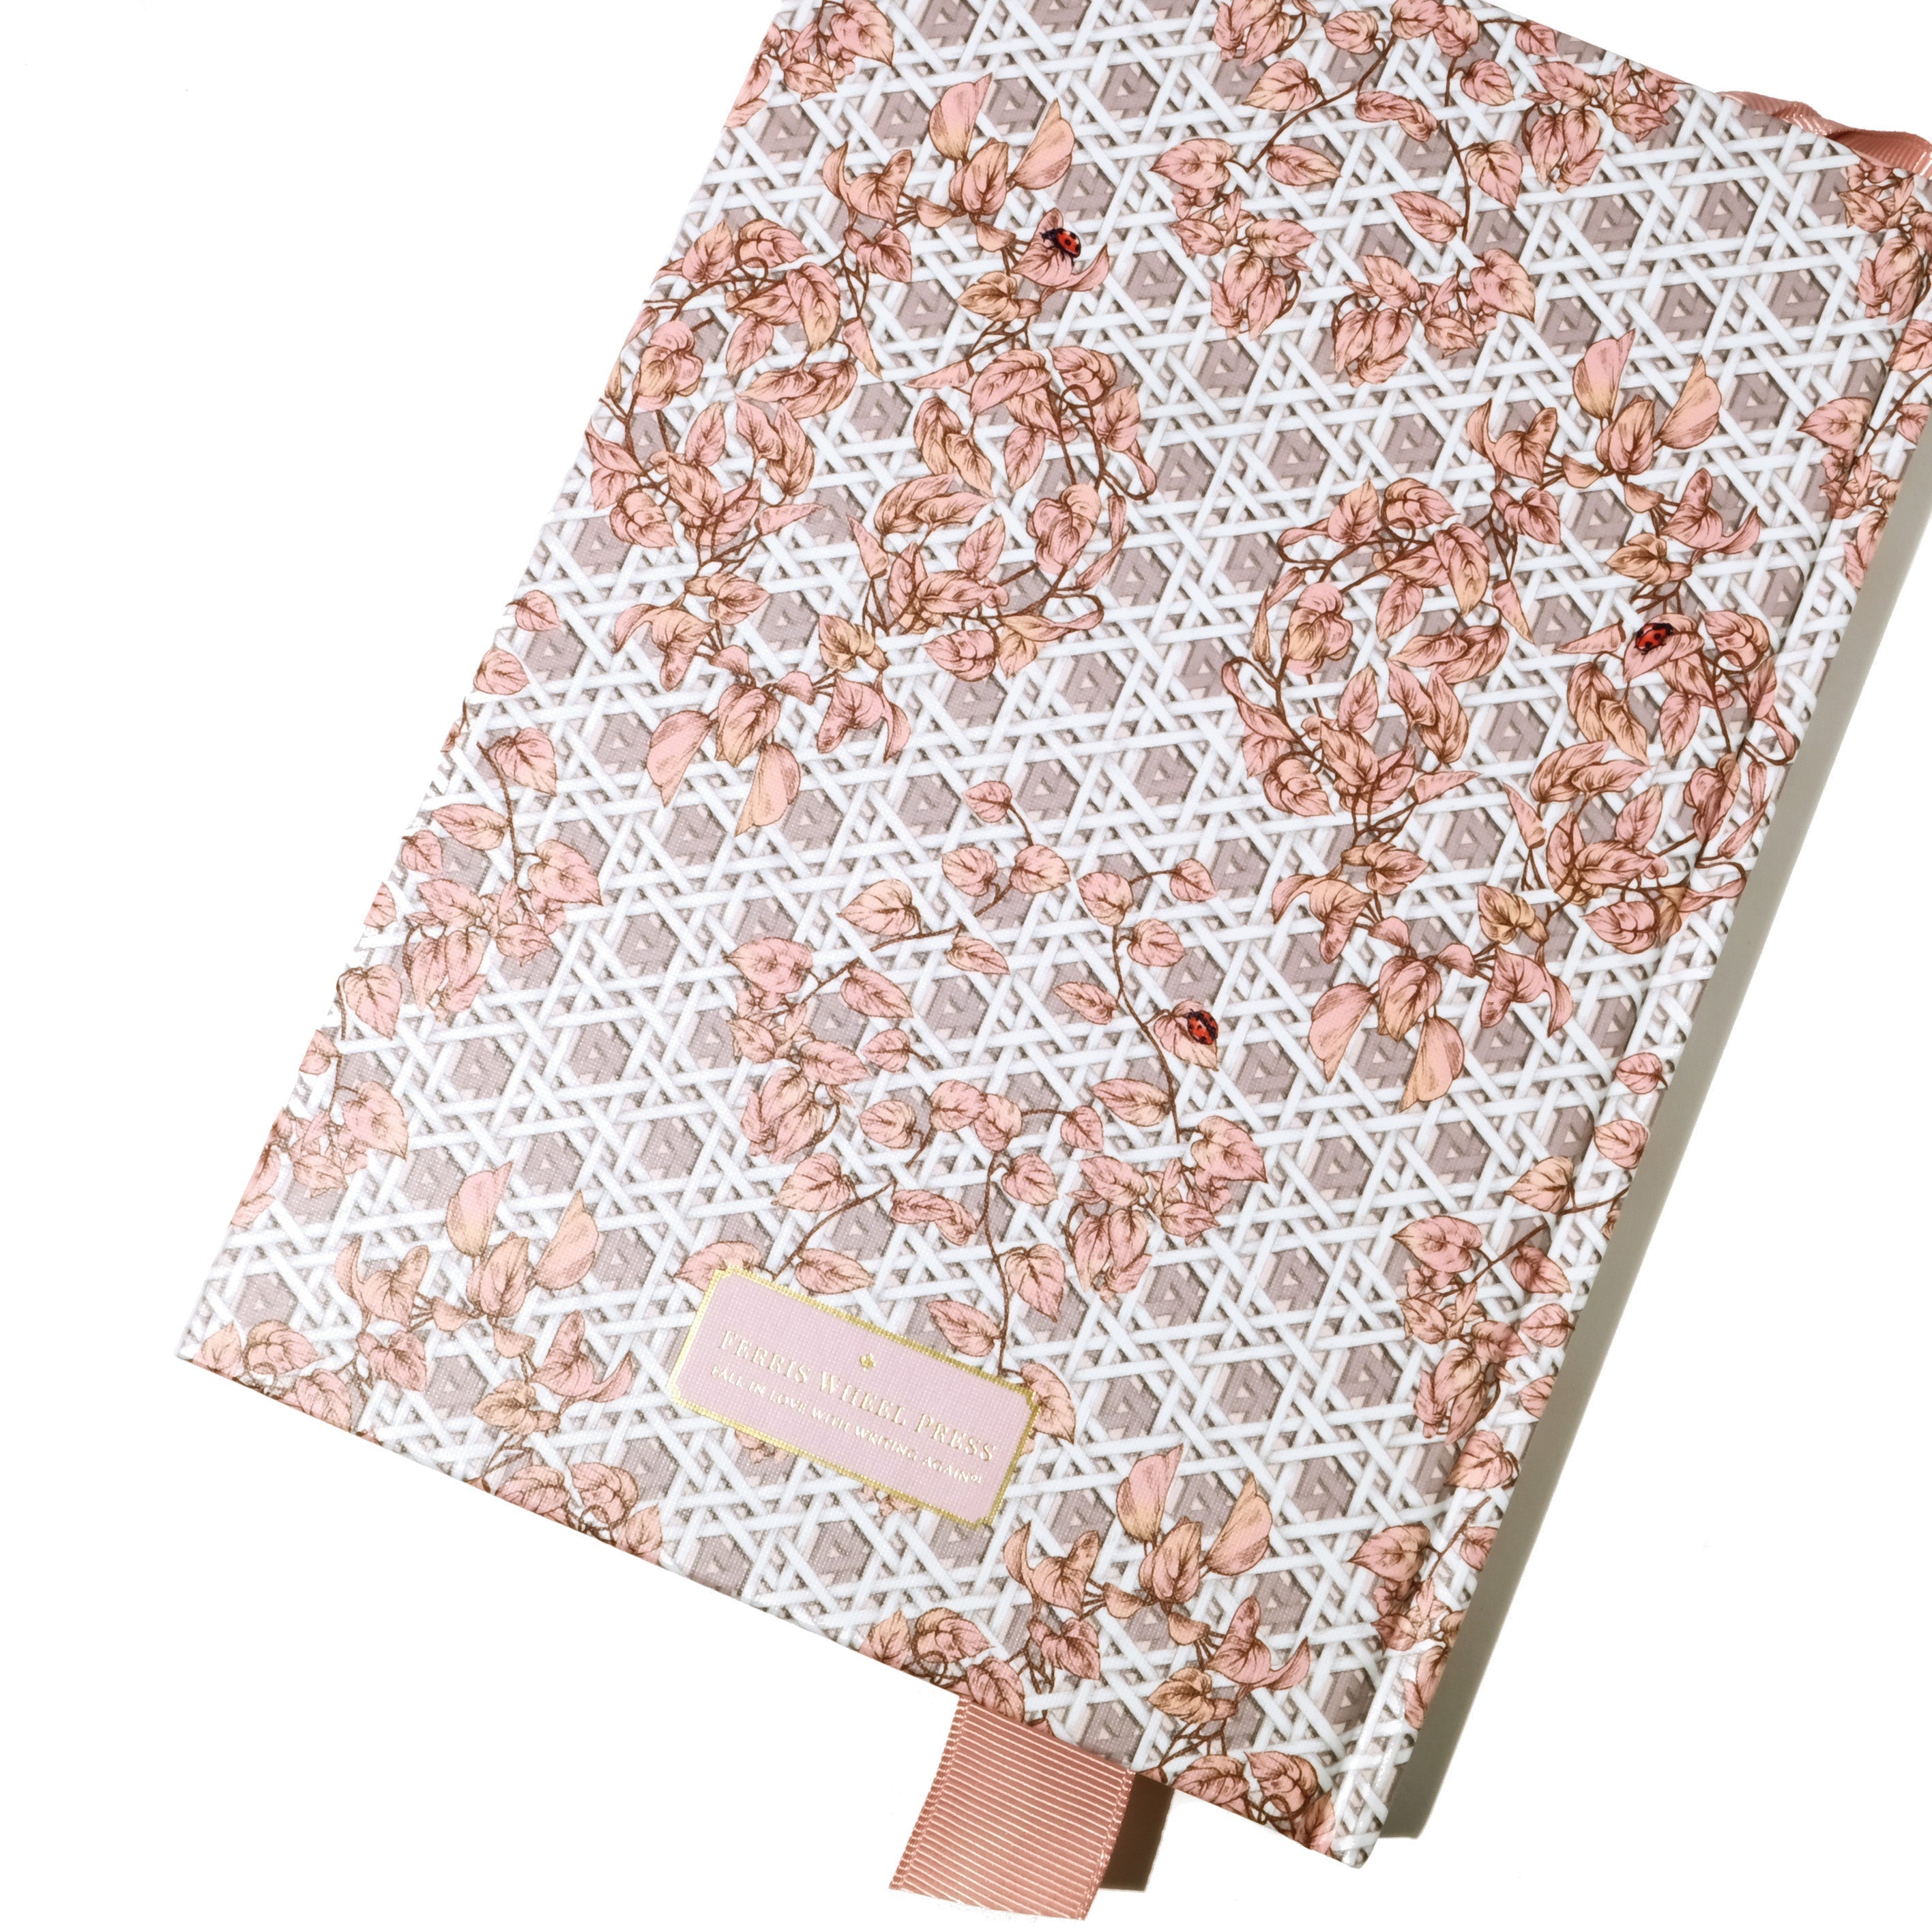 The Sketchbook A5: Enveloped in Rattan - Pink